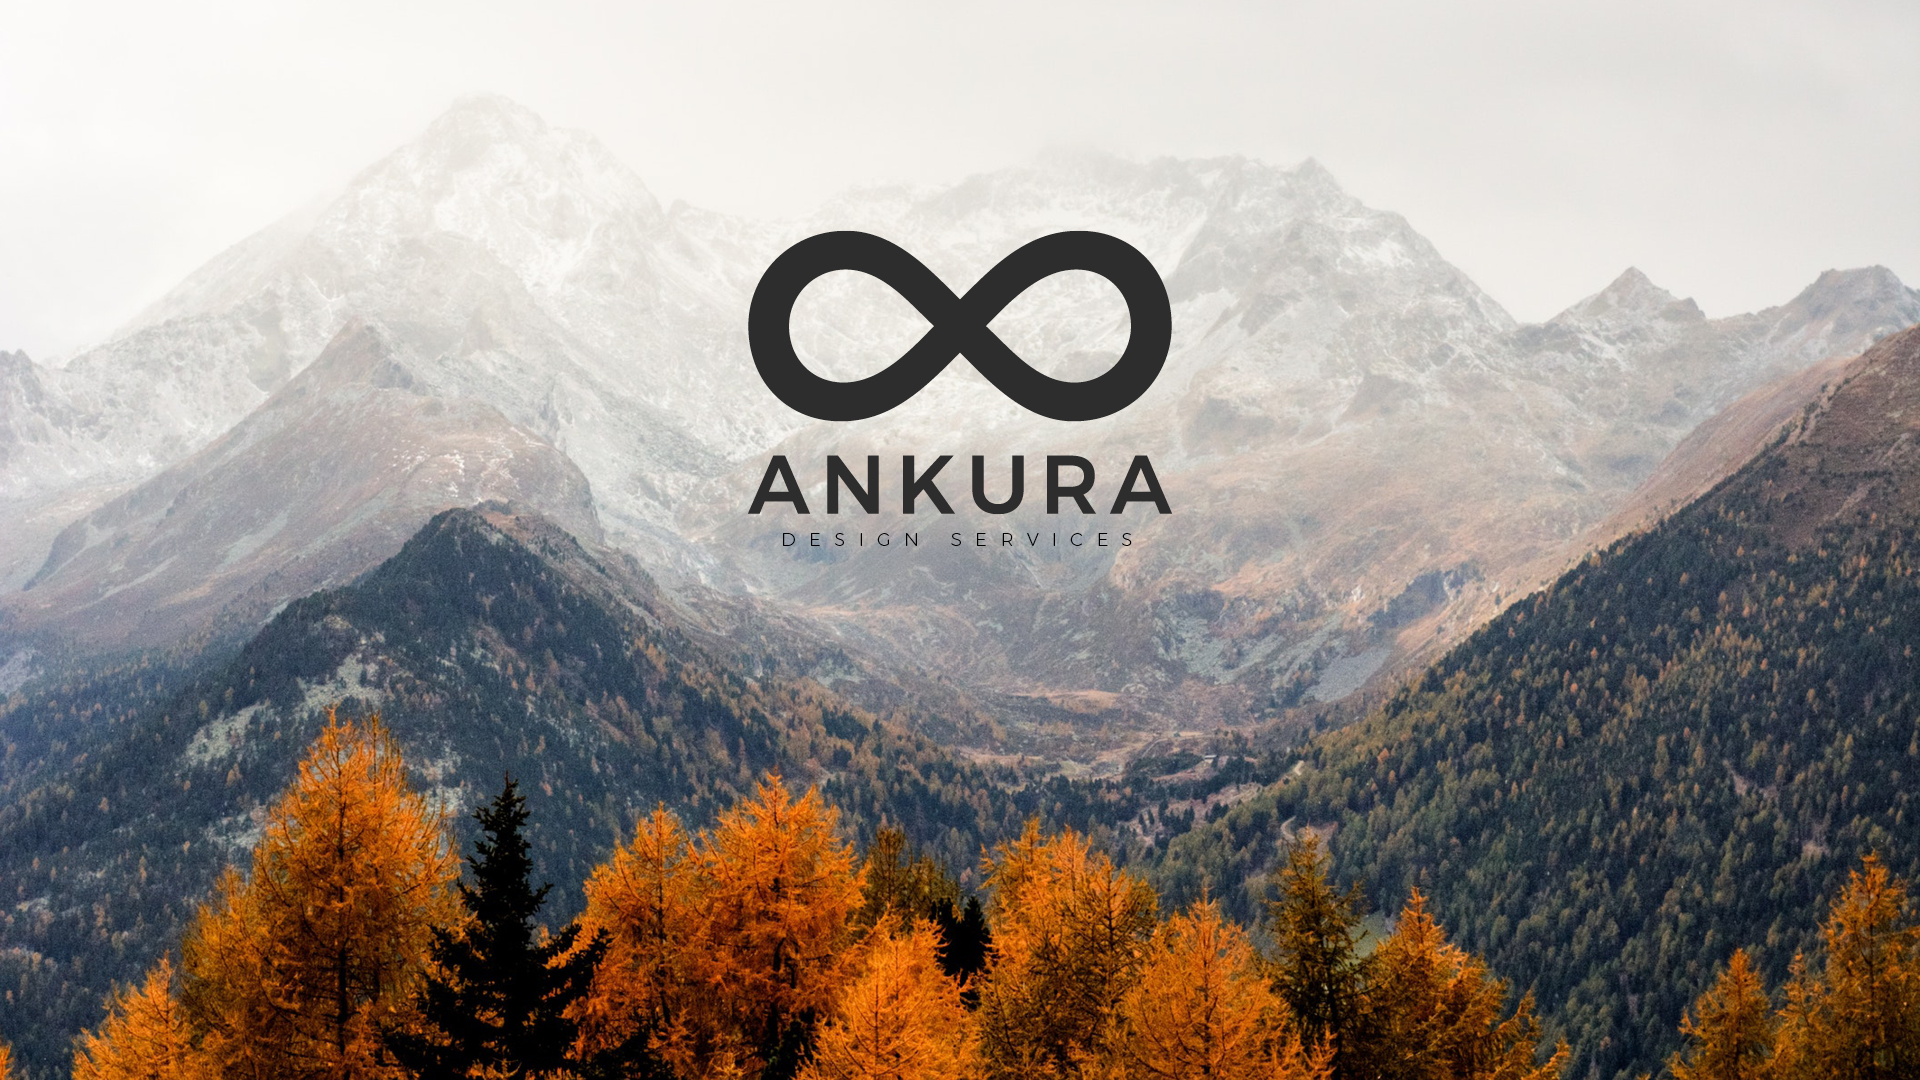 Ankura Design Services - Brand Image